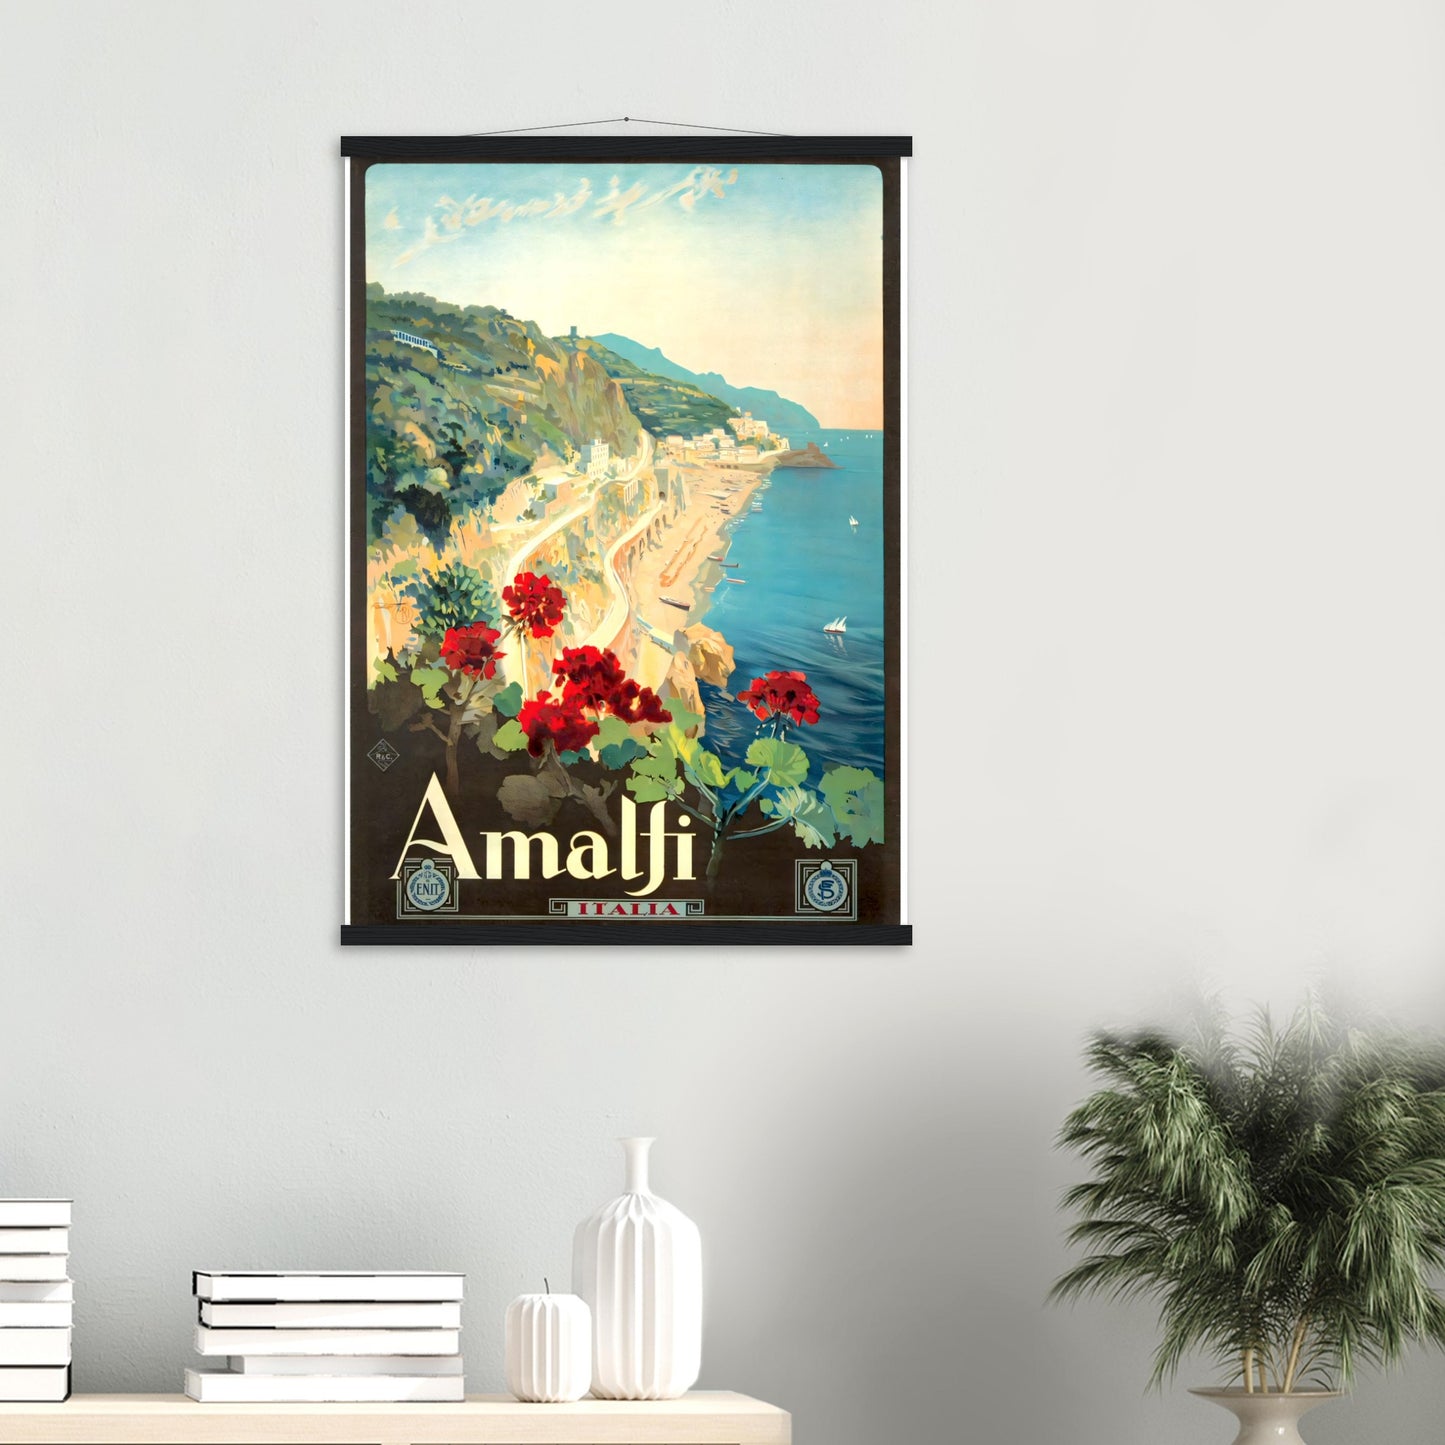 Amalfi Vintage Poster Reprint on premium Matte paper - Posterify